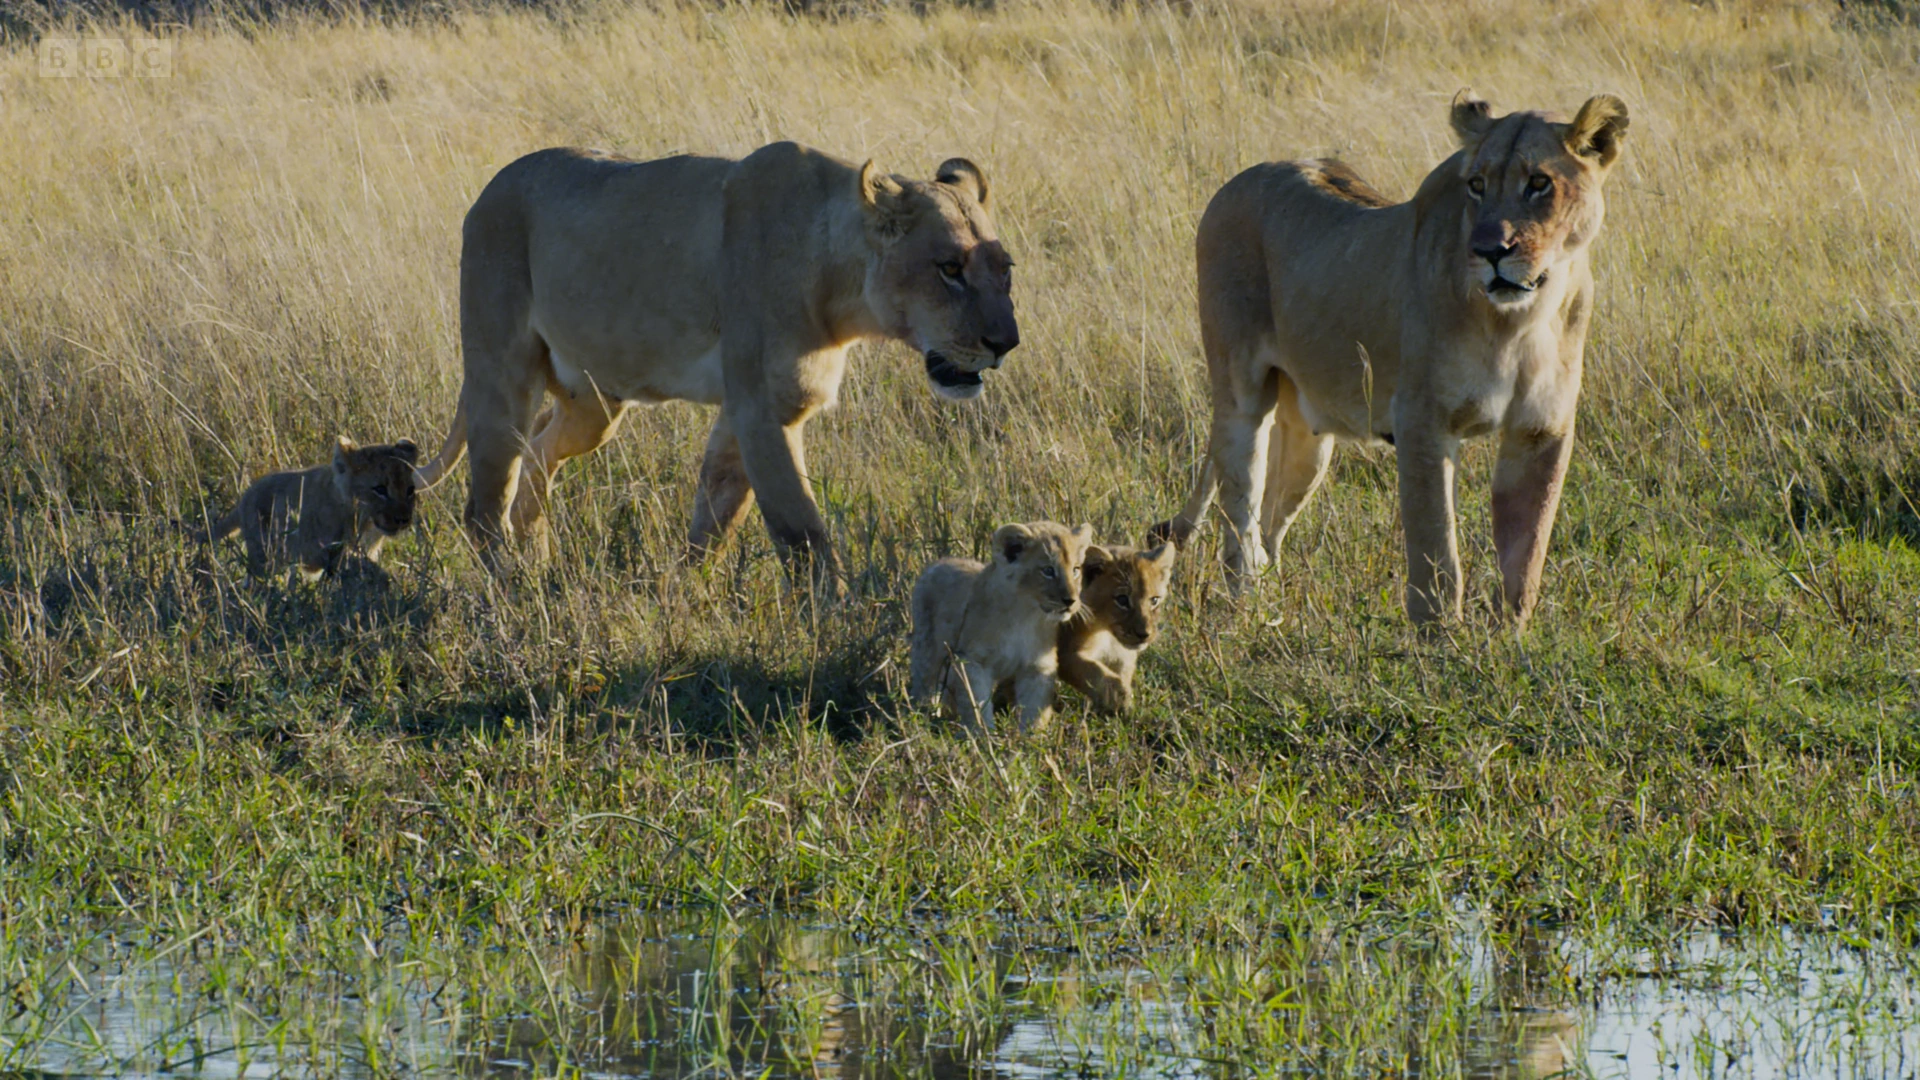 Lion (Panthera leo melanochaita) as shown in Planet Earth II - Grasslands